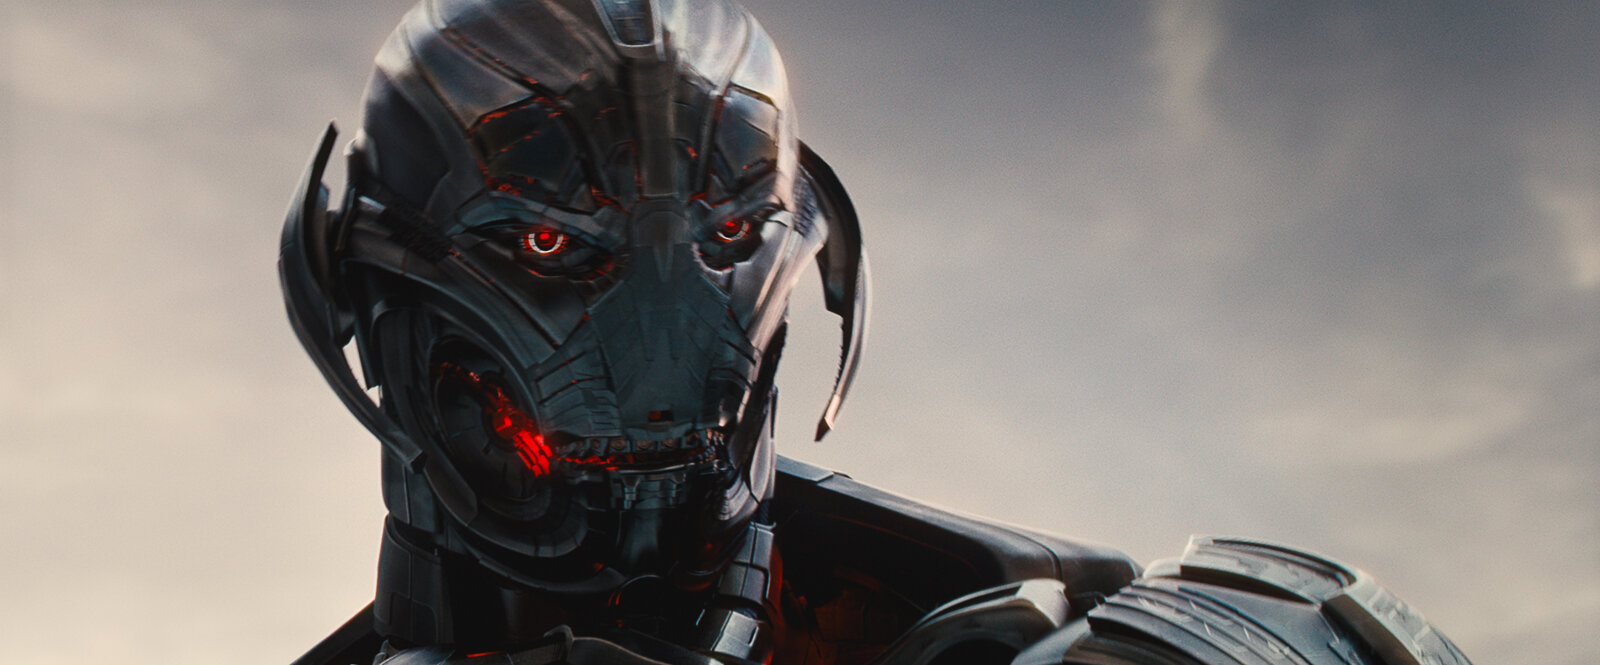 Bilder - Avengers: Age of Ultron - Cineman